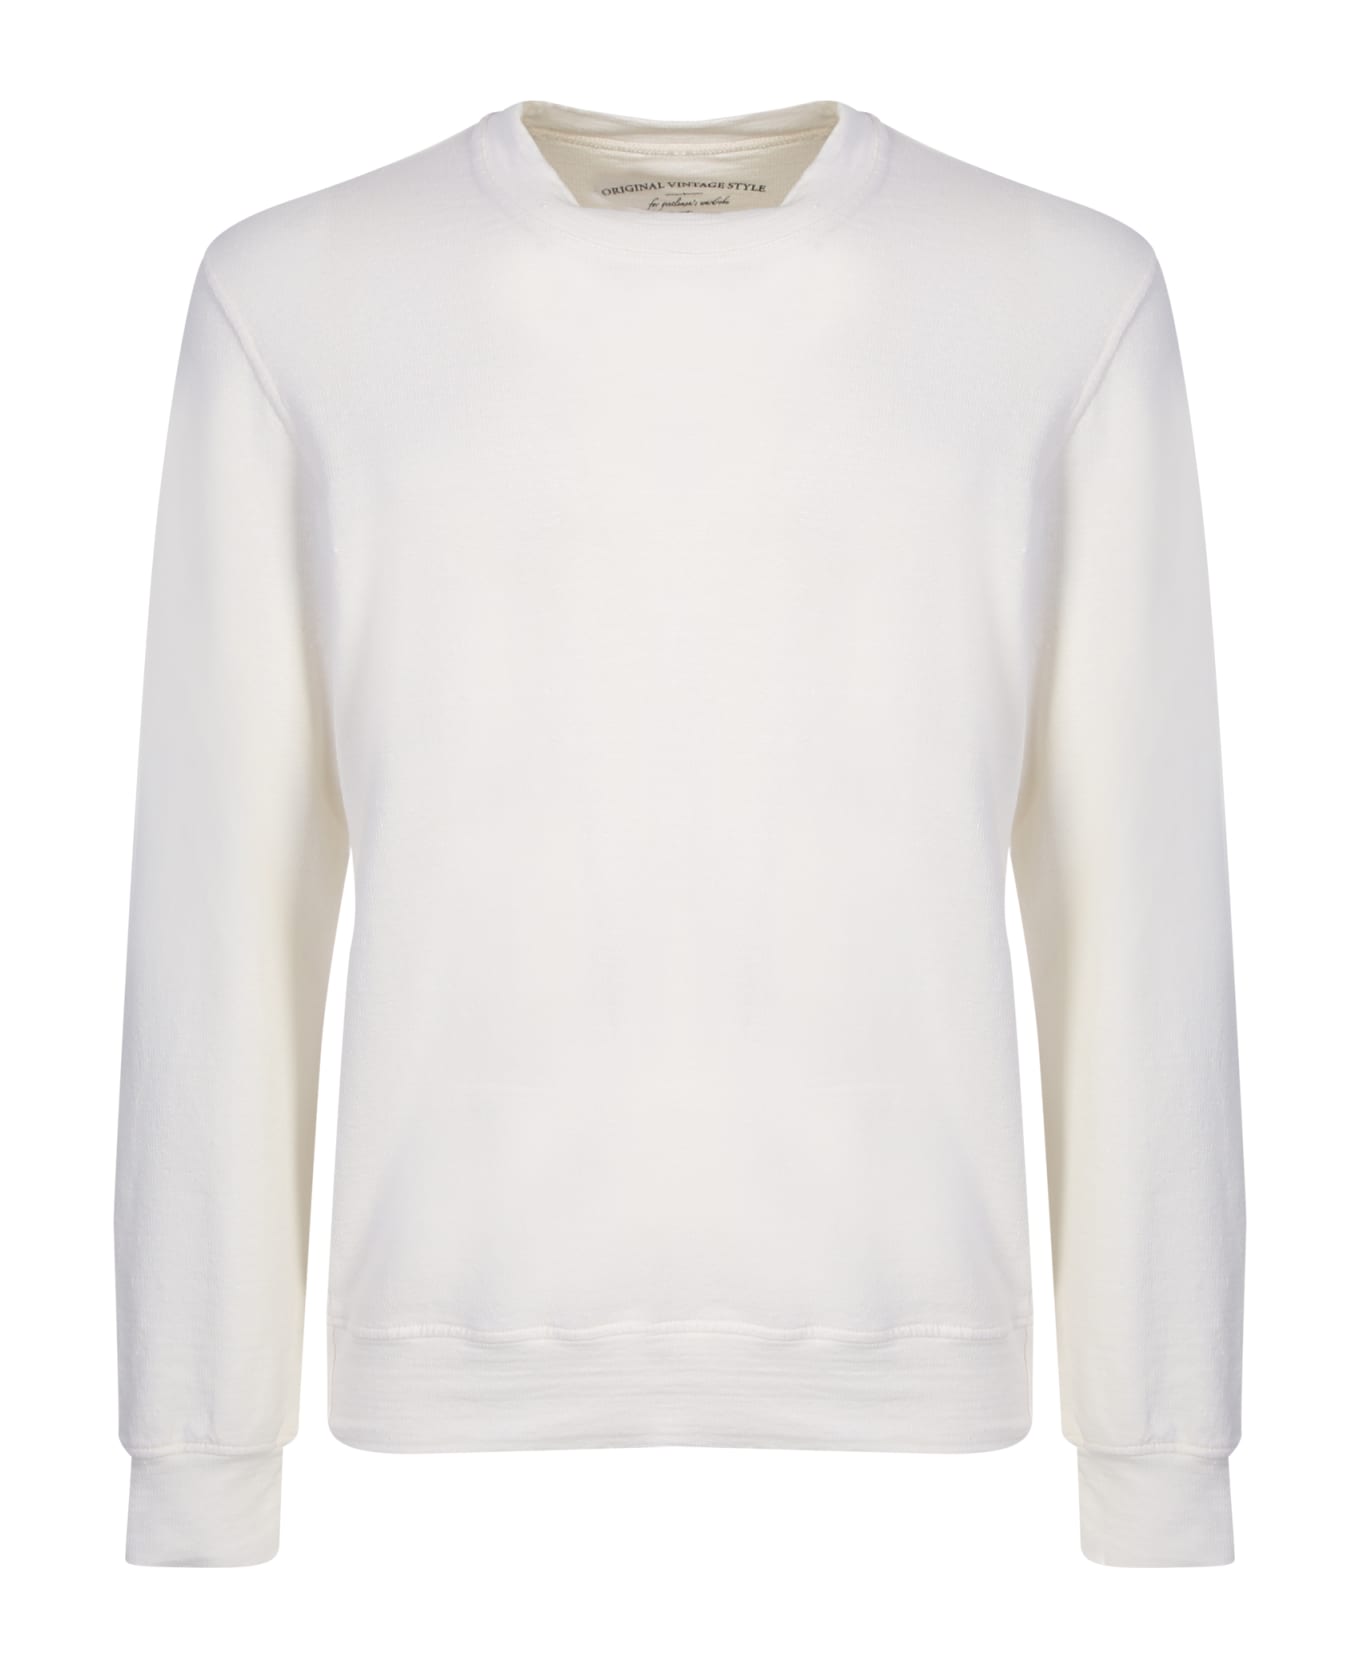 Original Vintage Style White Linen Sweatshirt - White